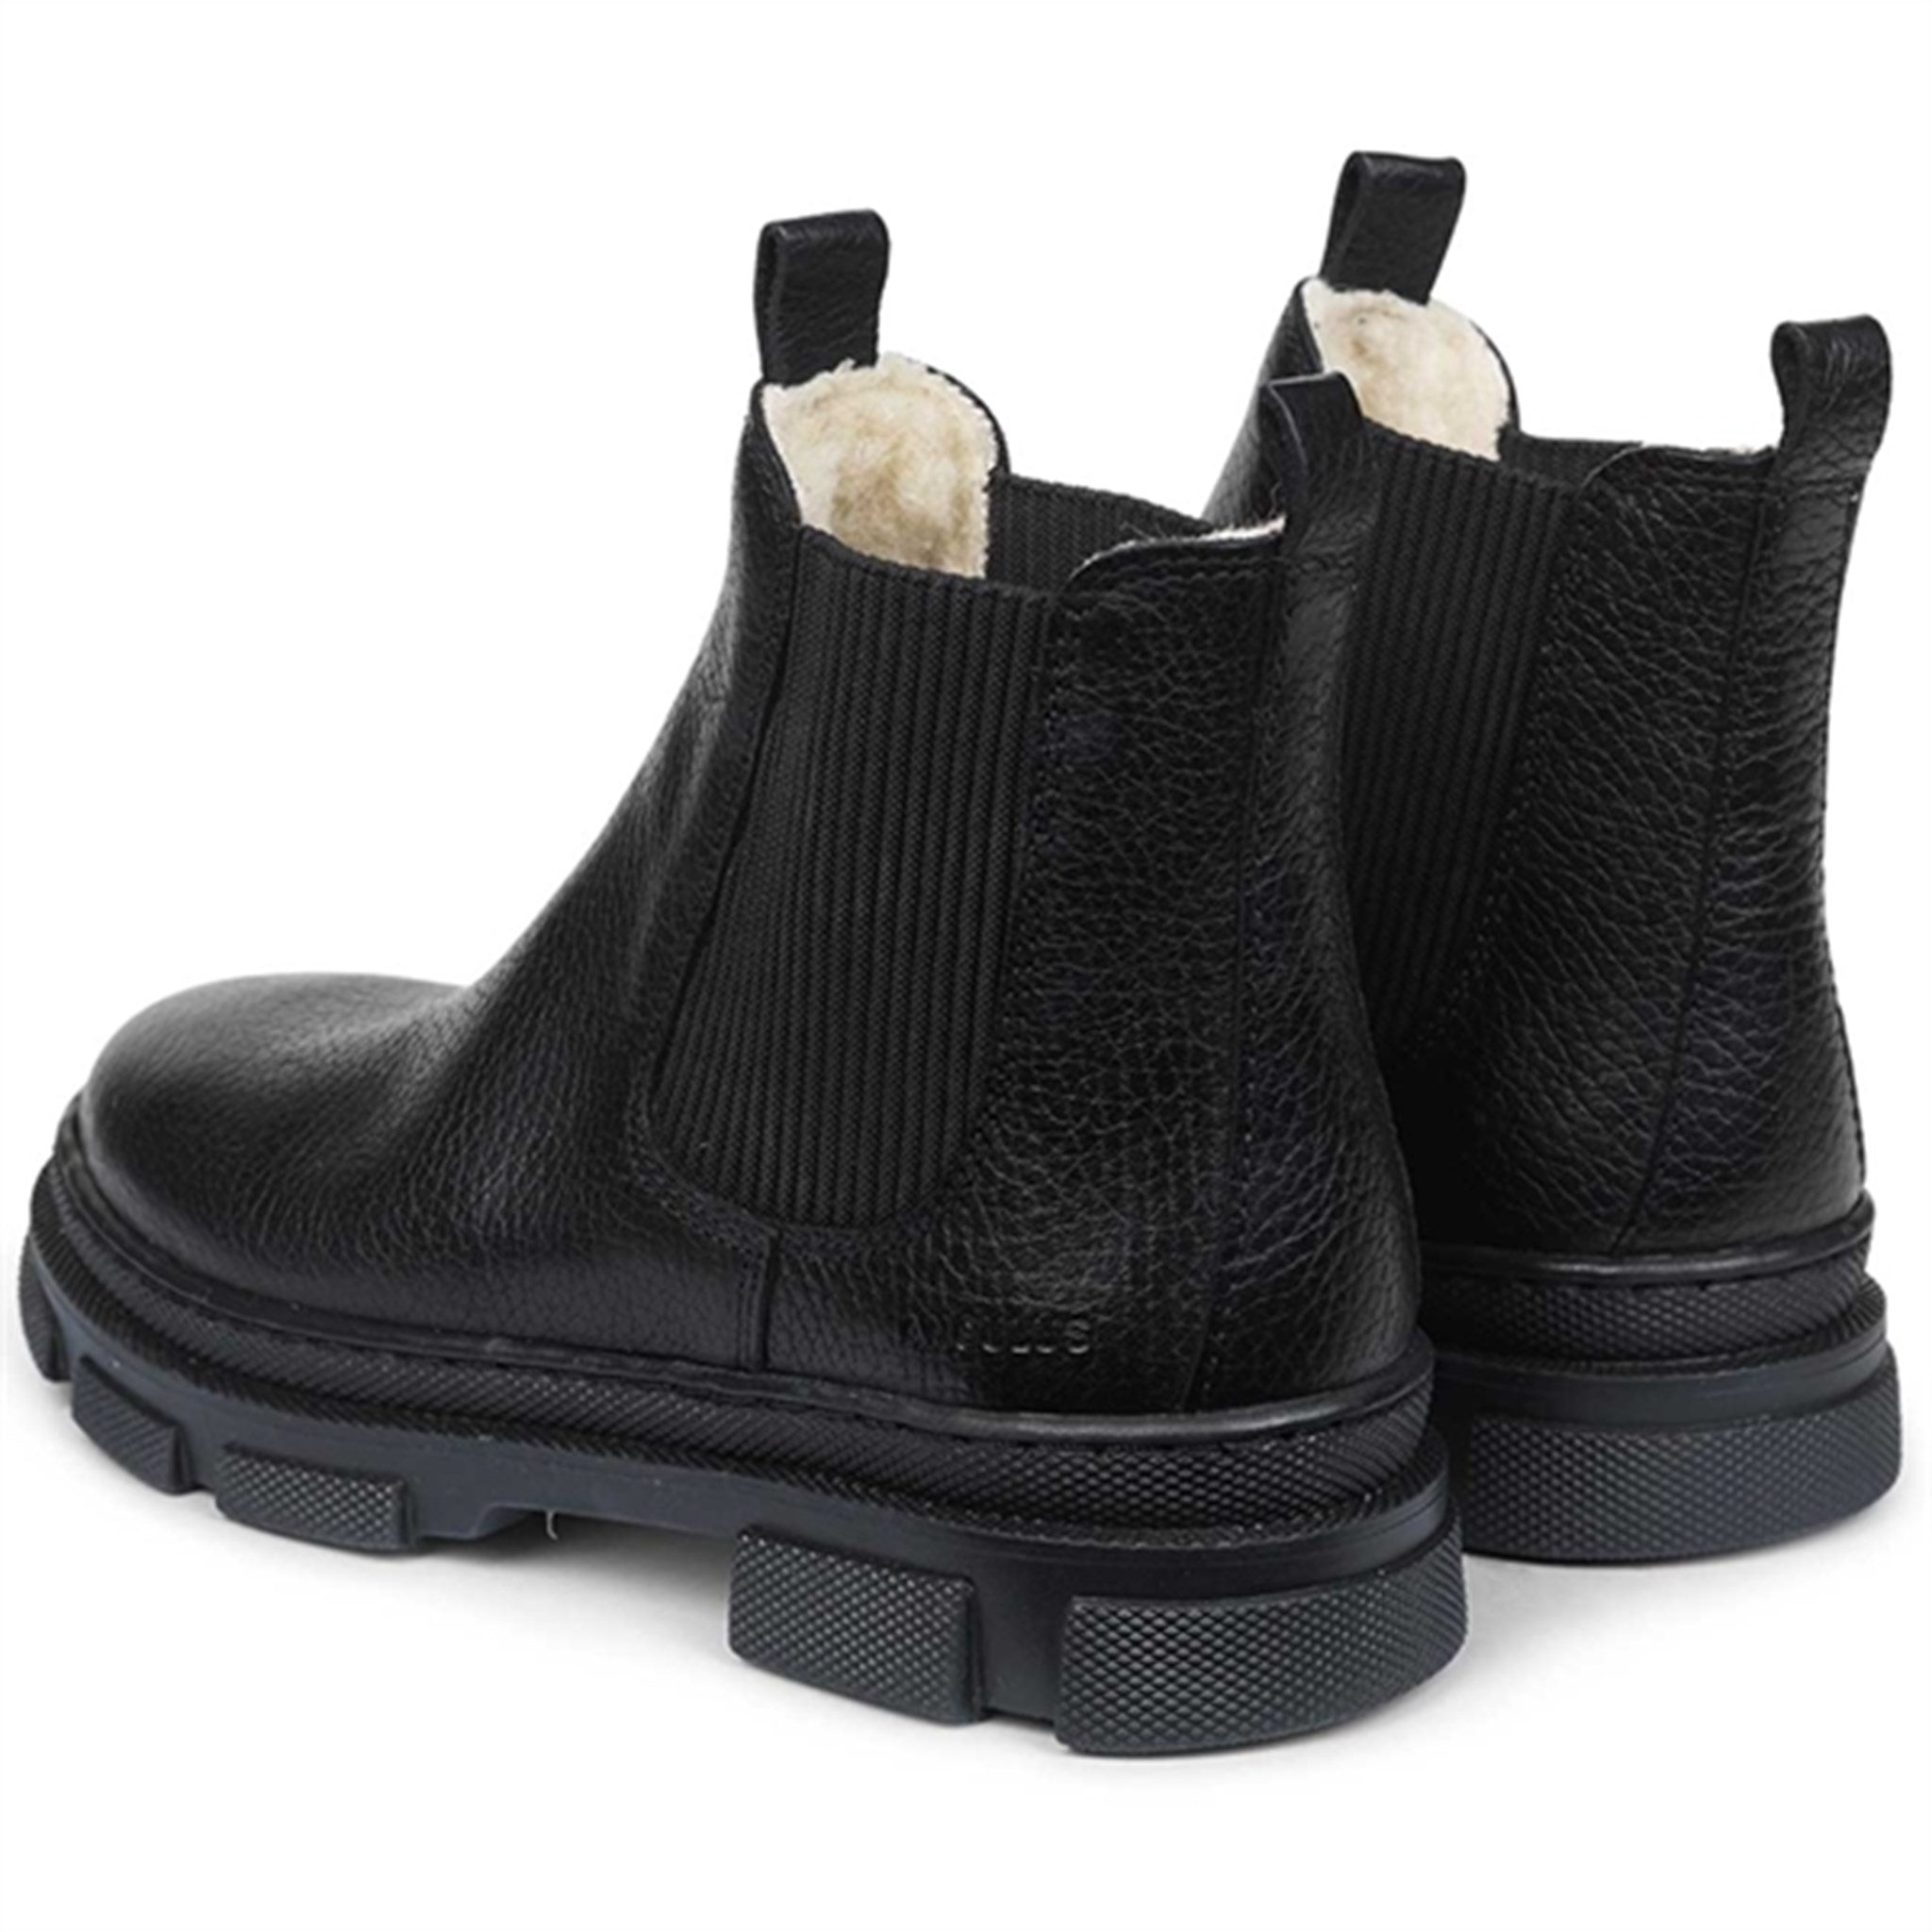 Angulus Boots w. Elastic And Wool Black 7202-401-0334-2504 2